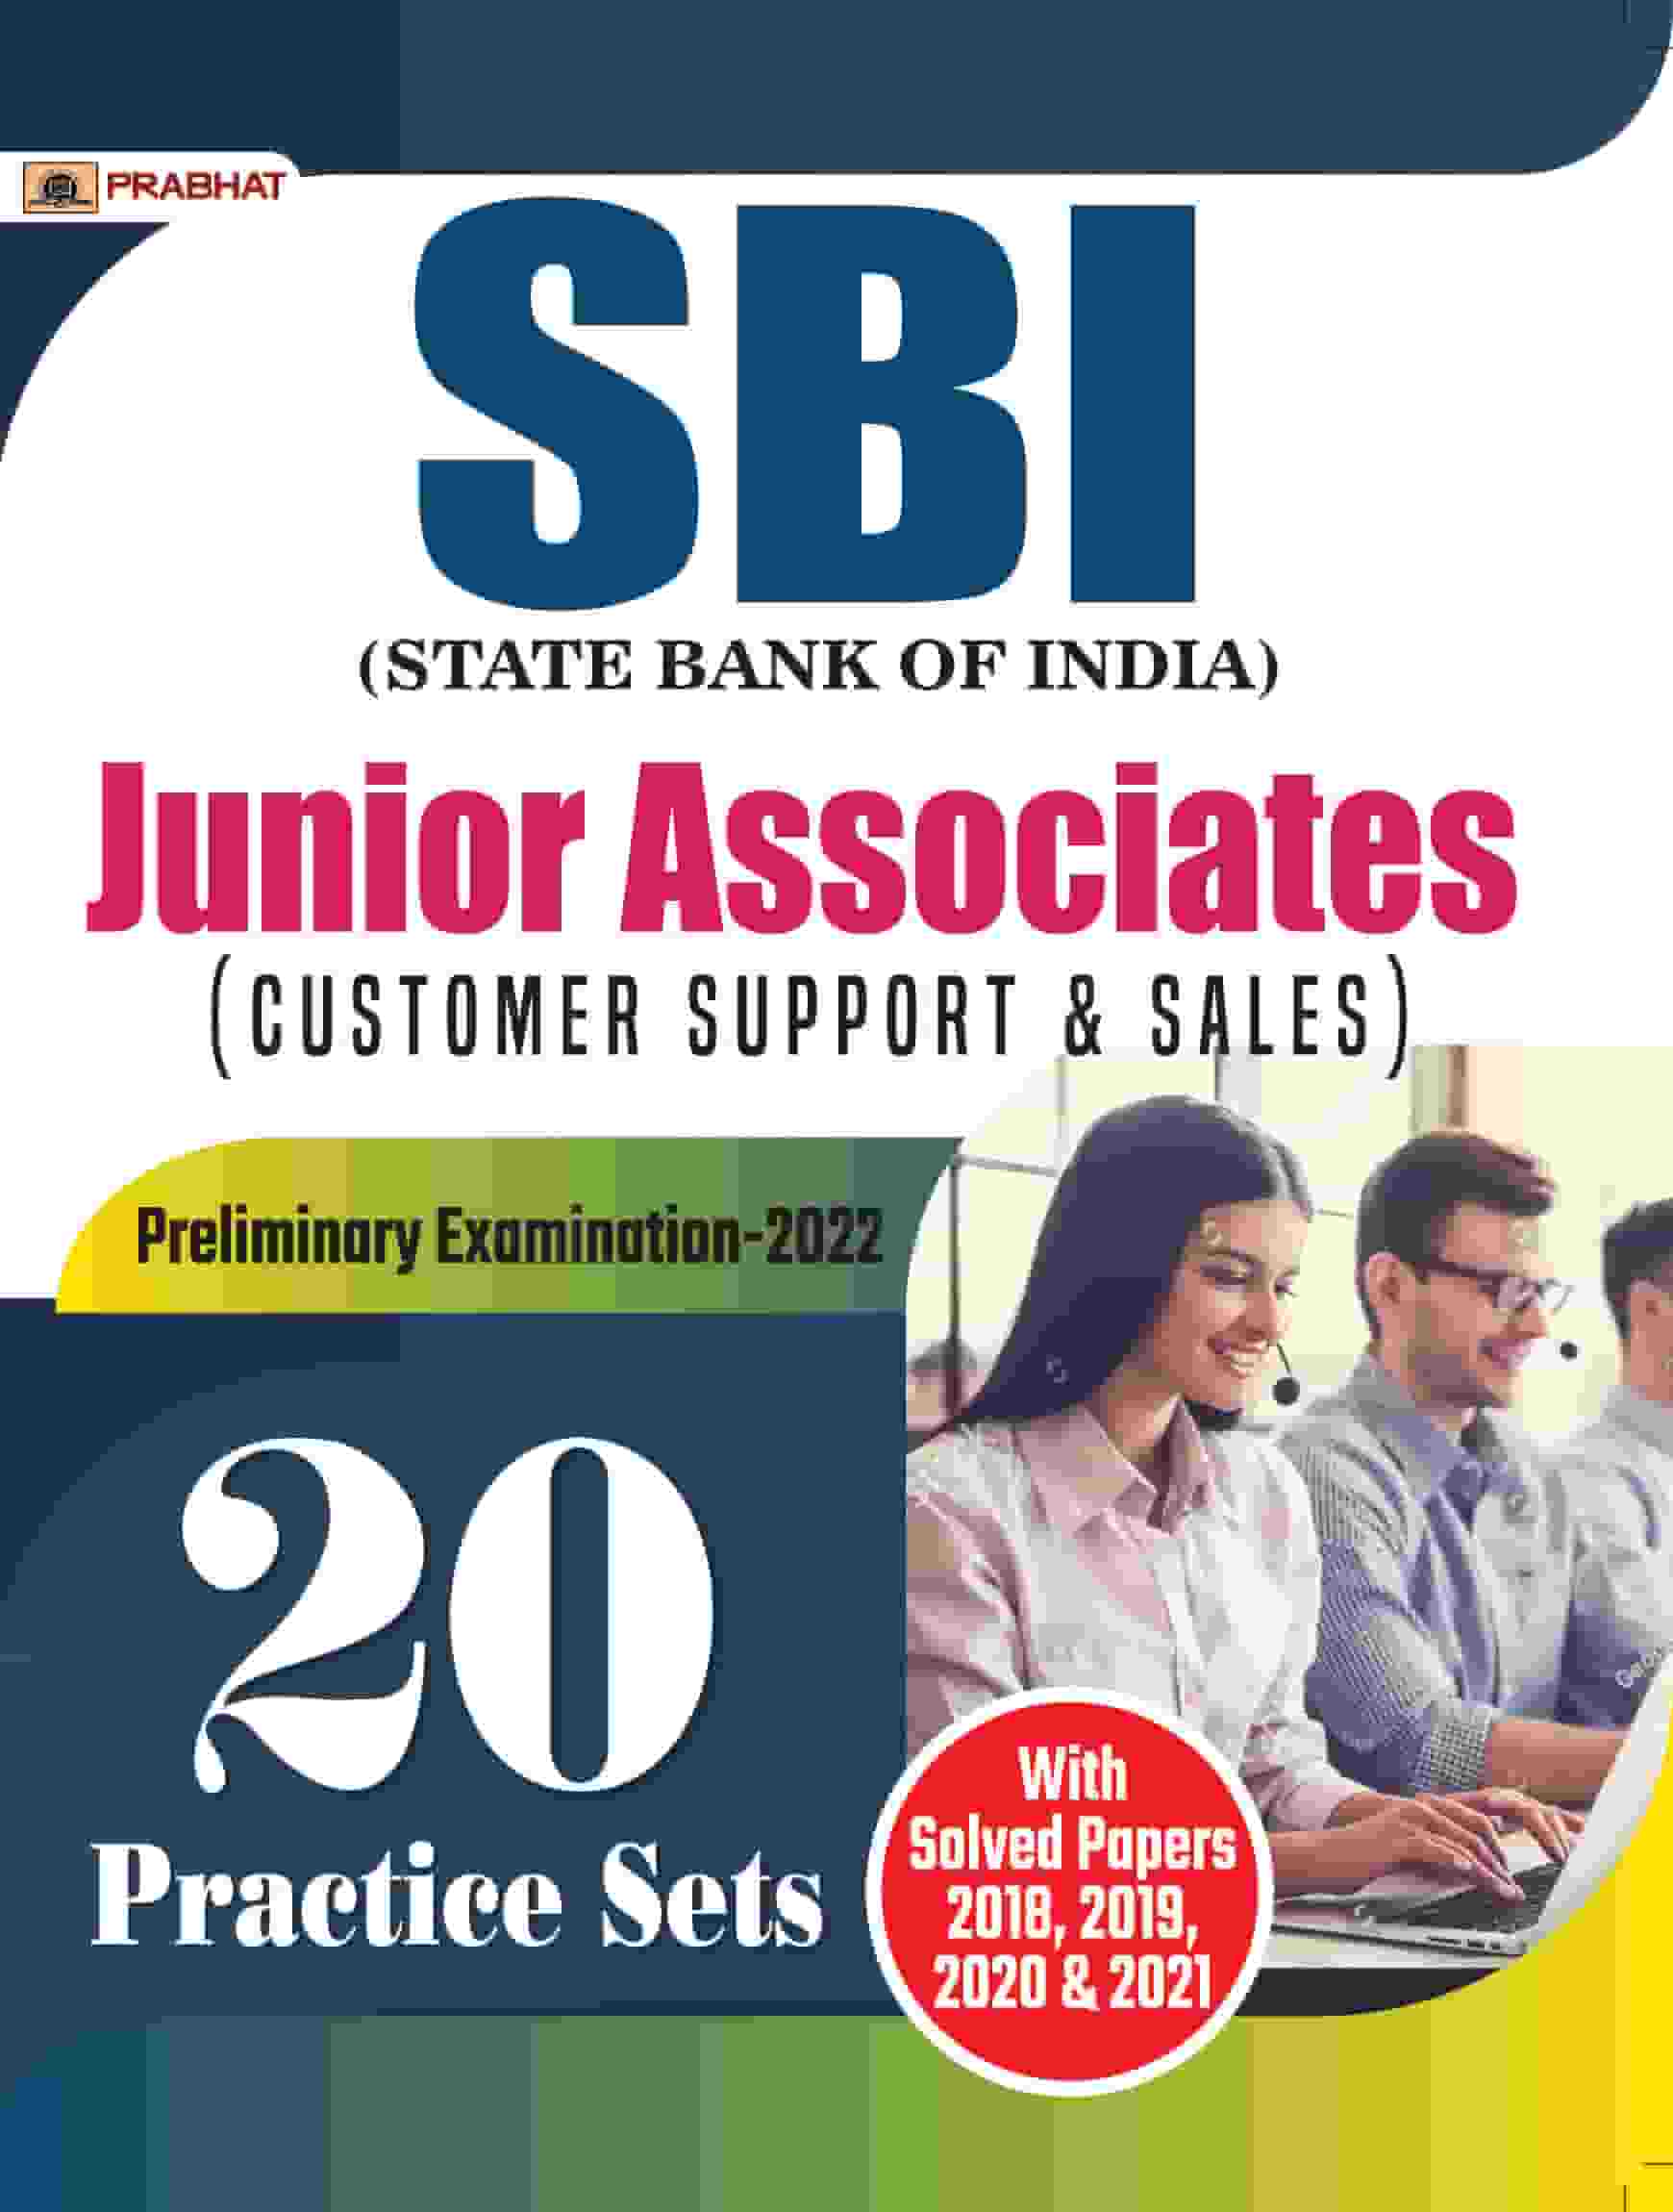 SBI Junior Associates Preliminary Examination-2022 20 Practice Sets